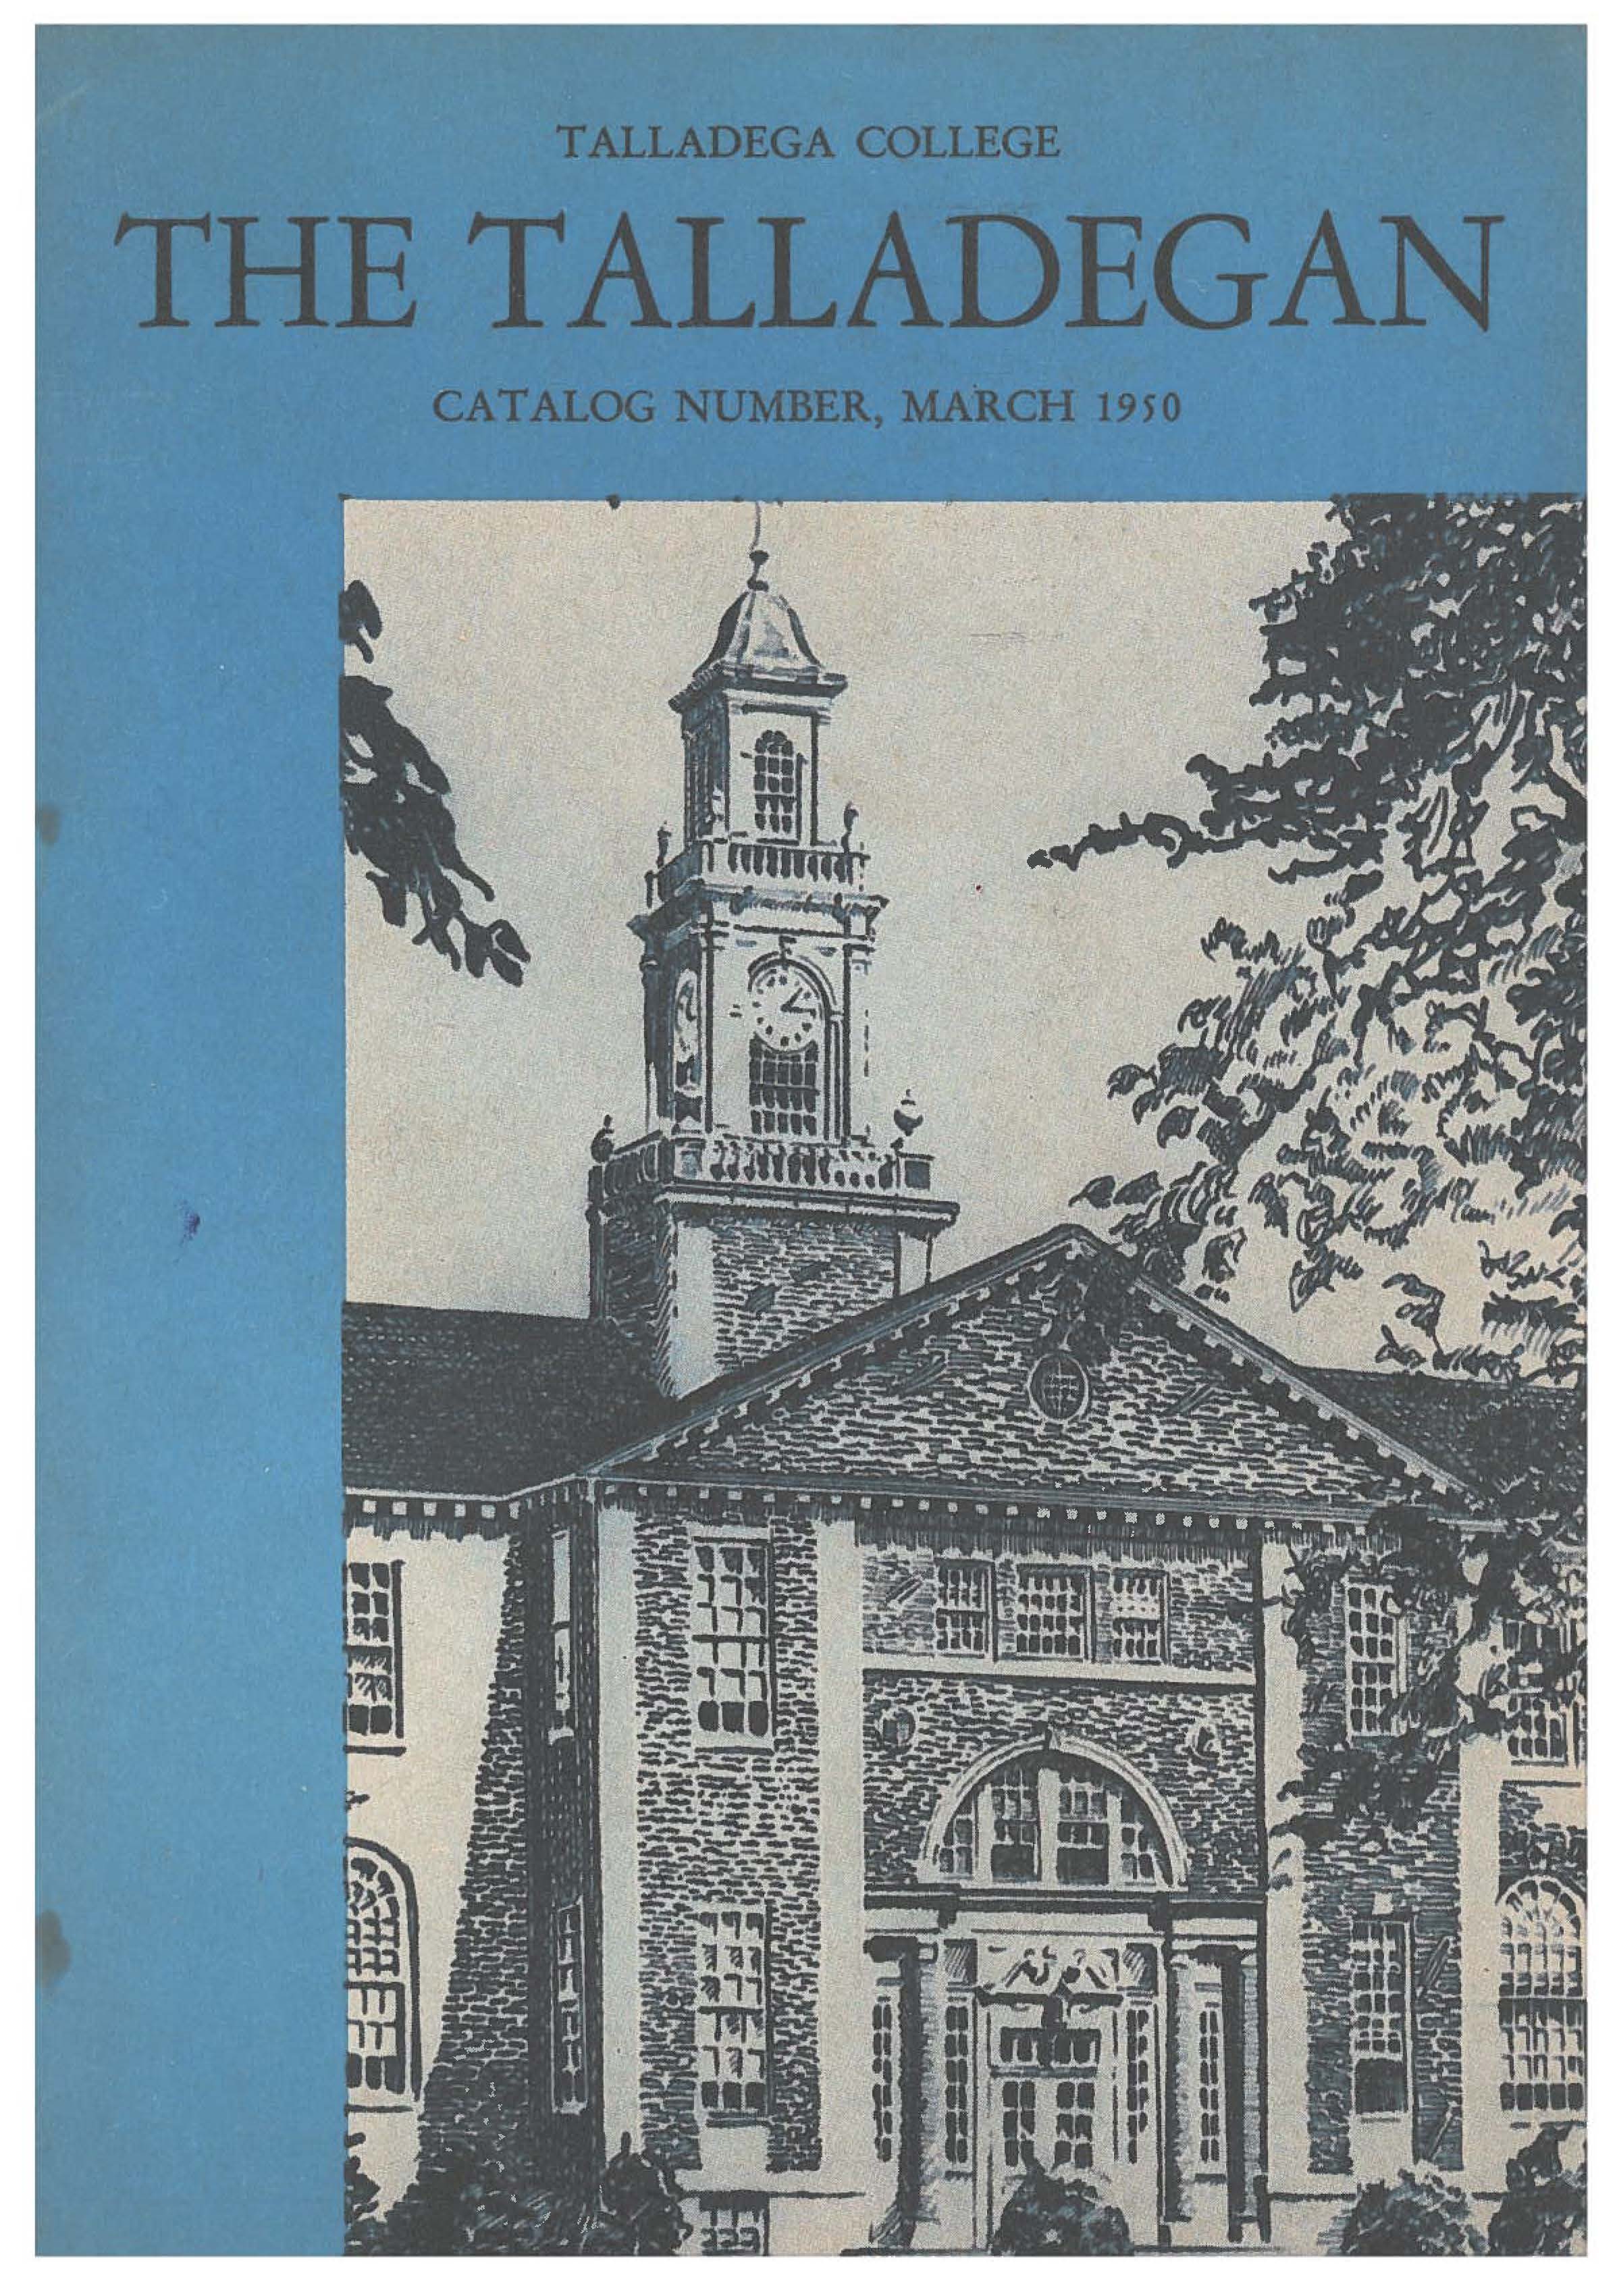 Talladega College Catalog 1950